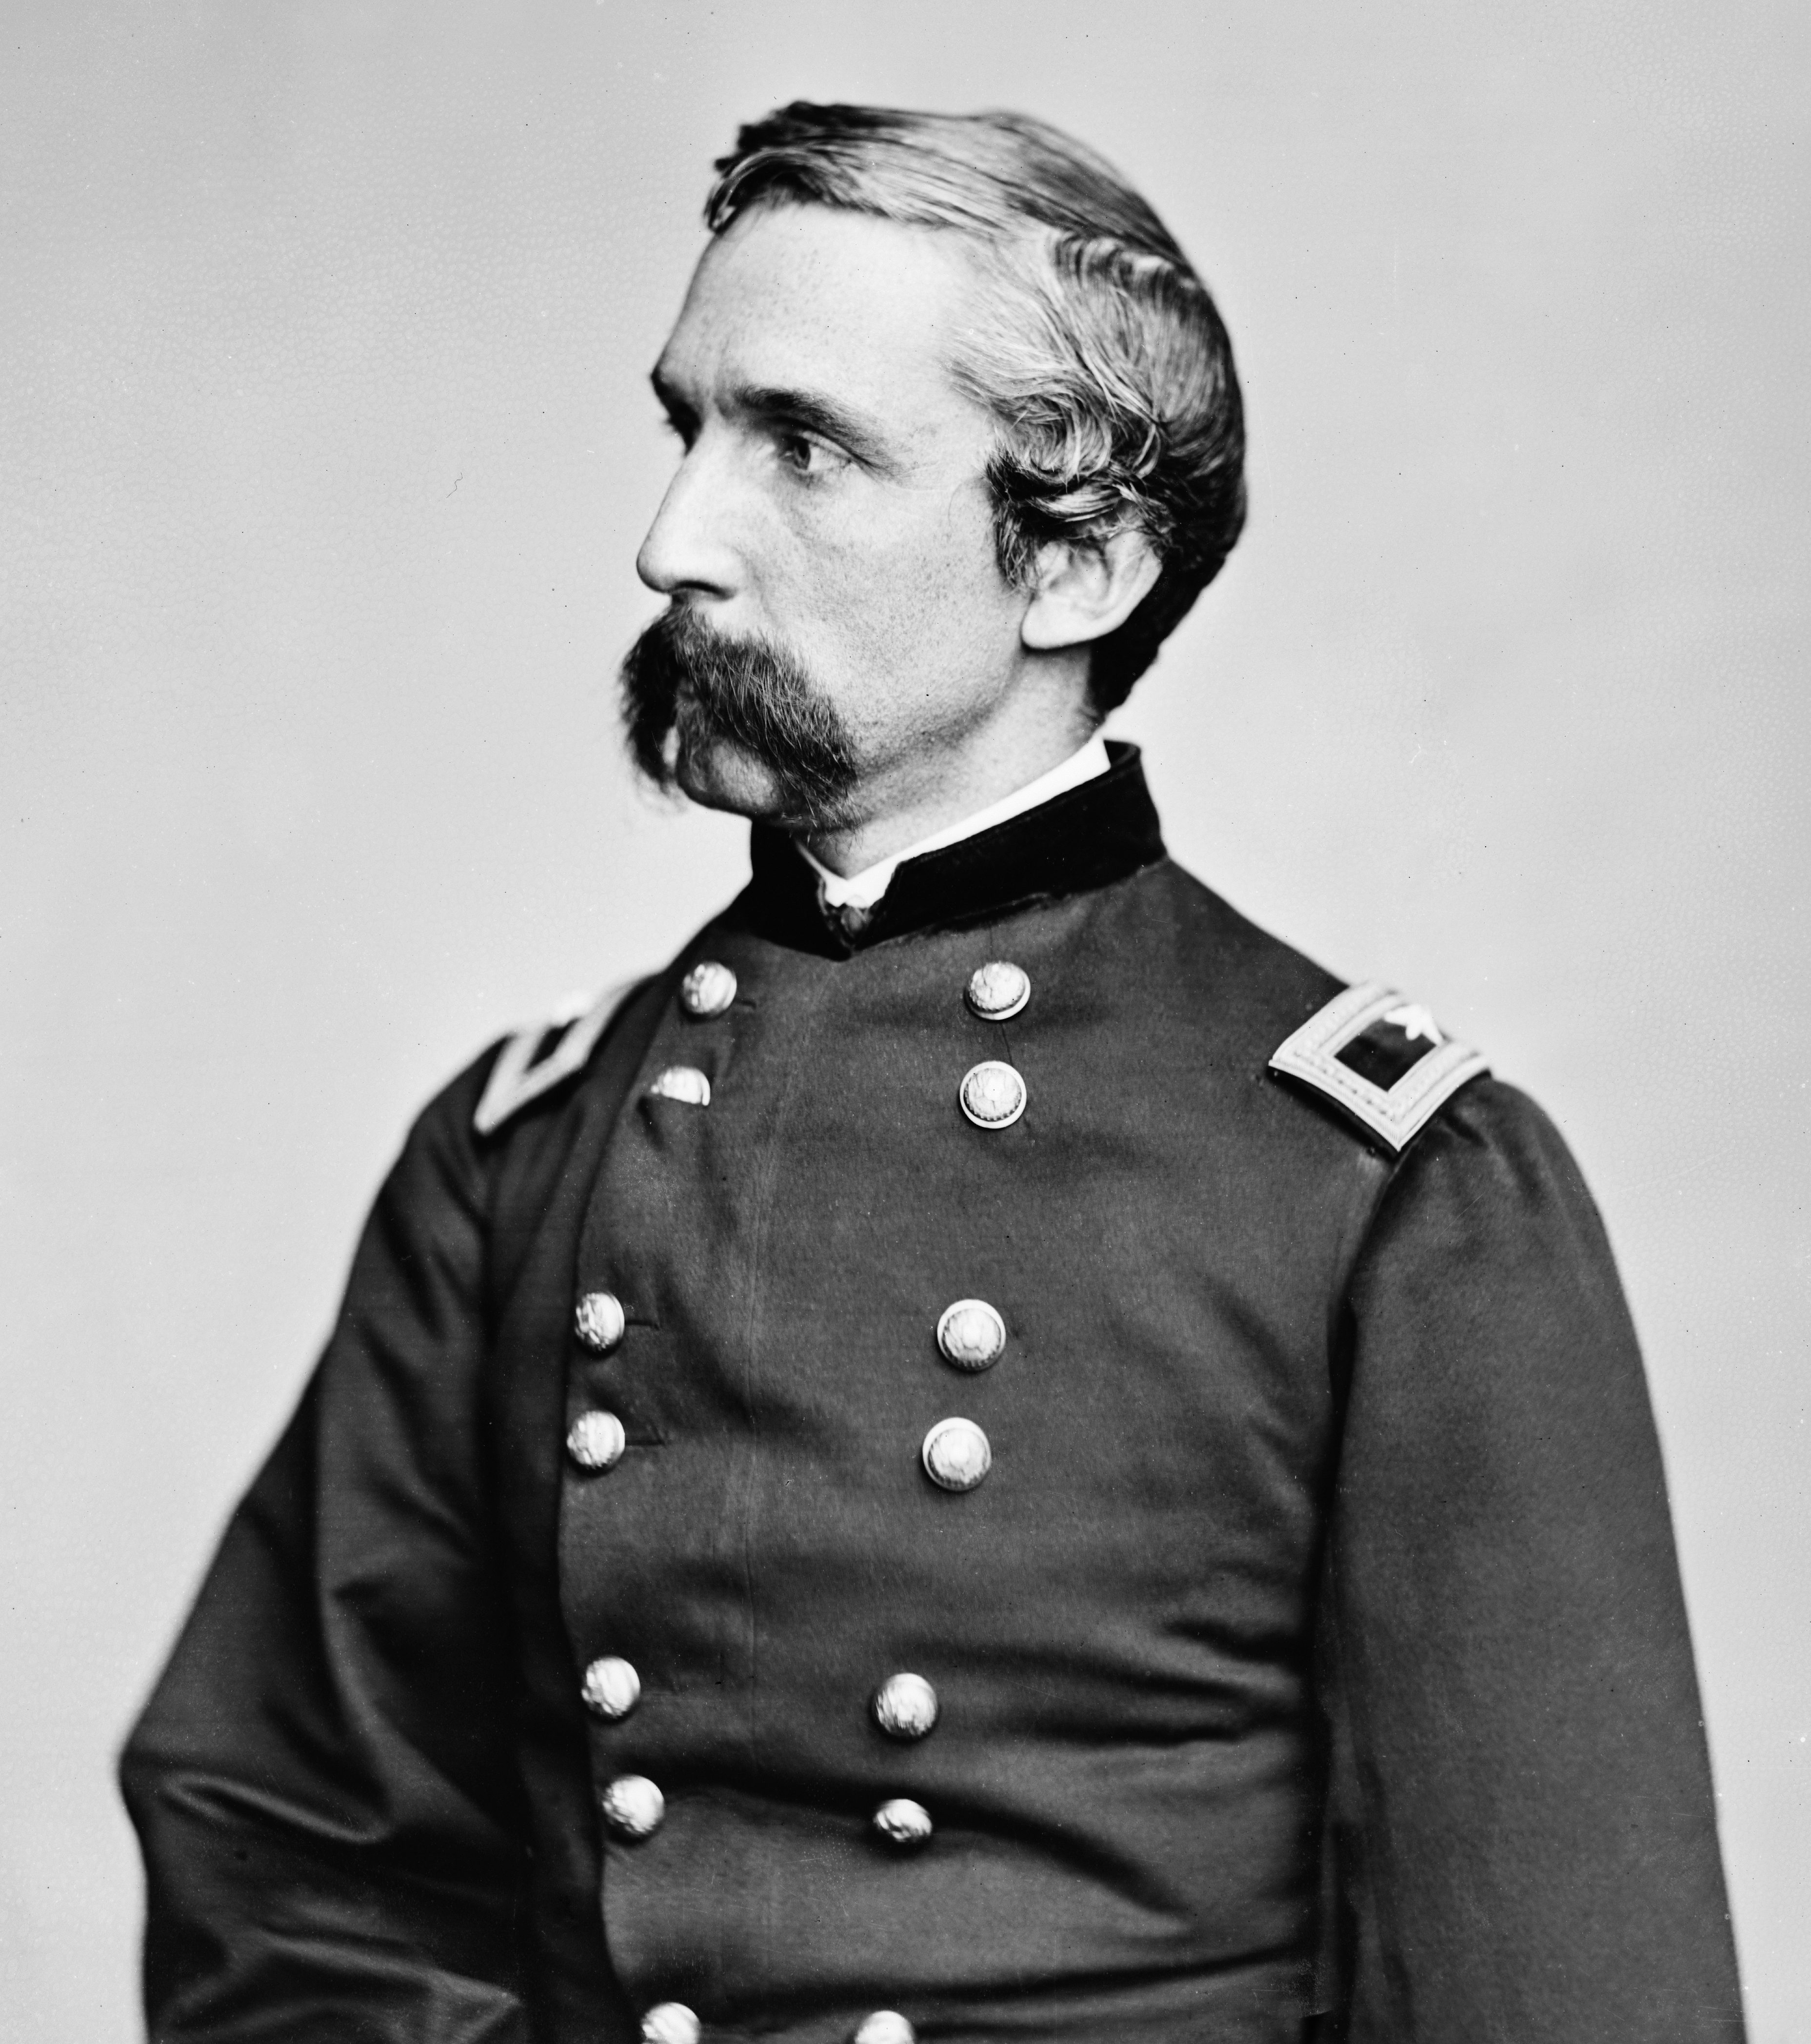 portrait of Civil War general